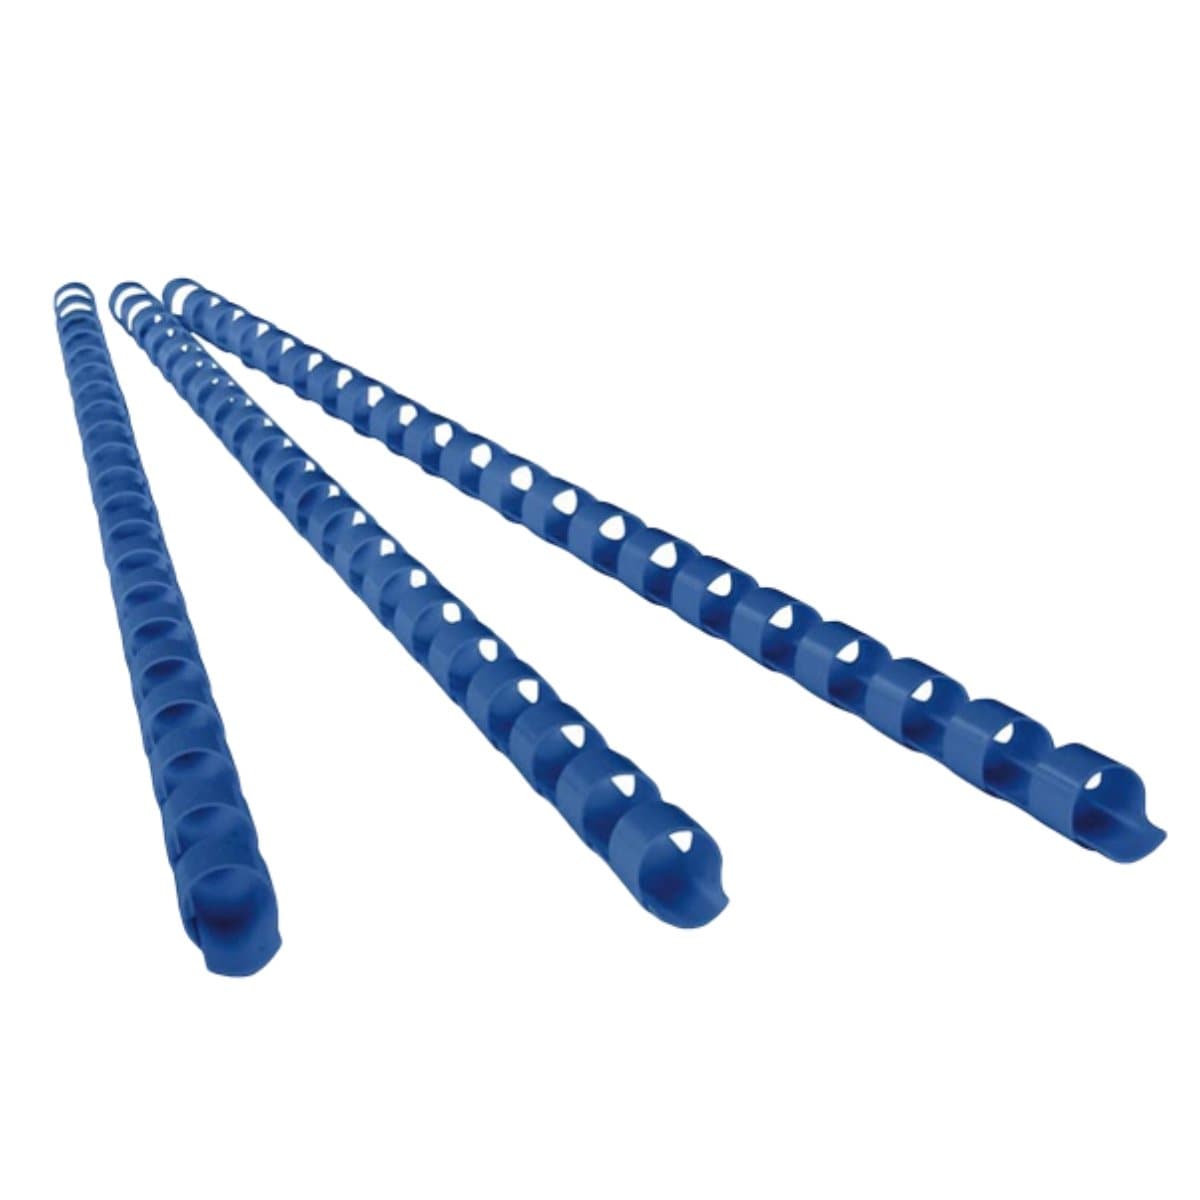 FIS Comb Binding Rings, Blue